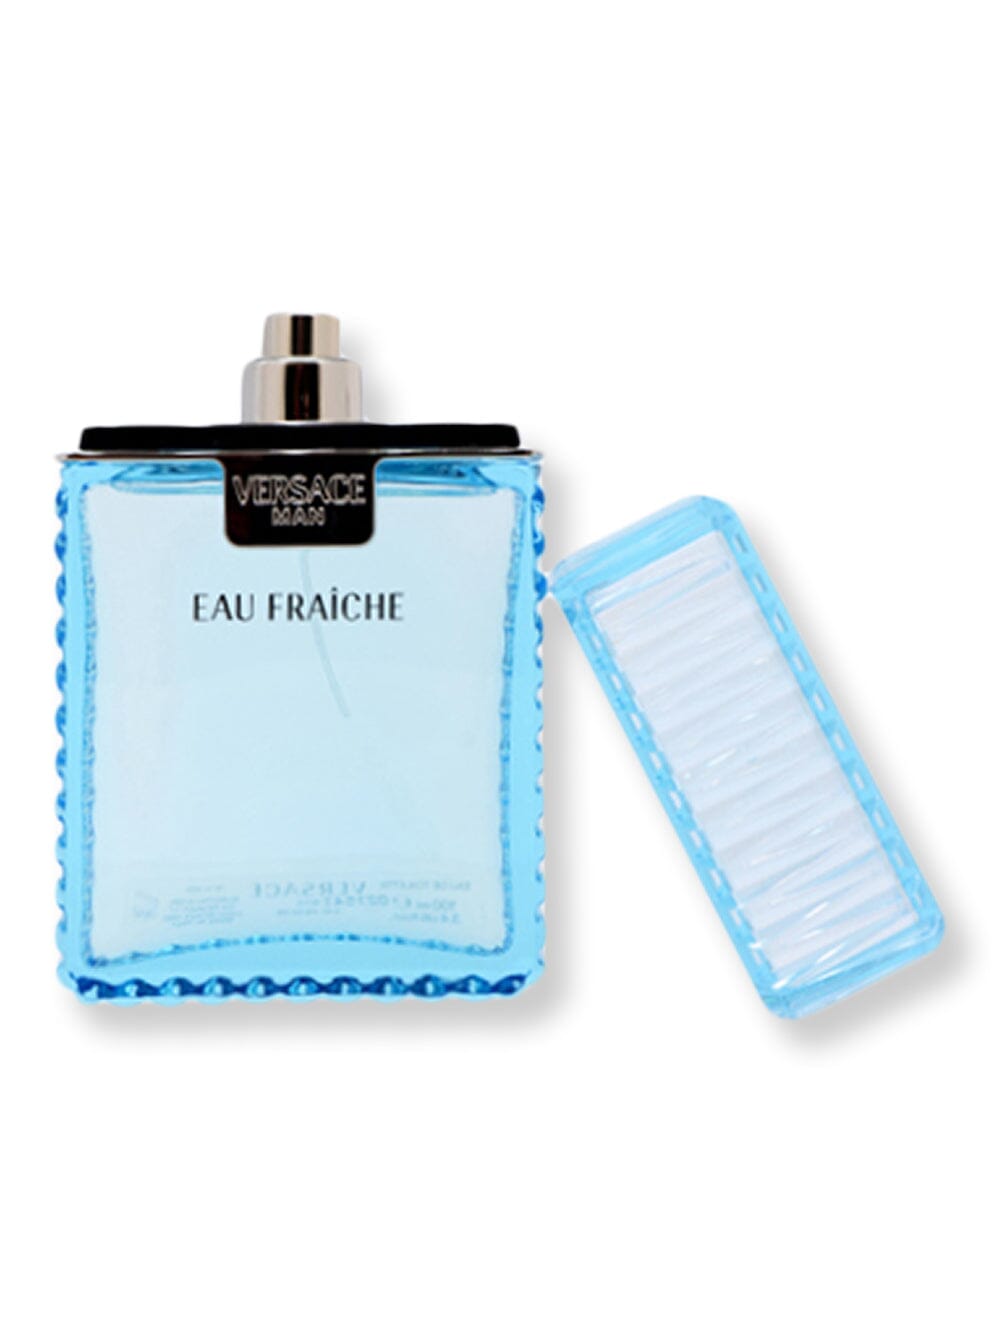 Versace Versace Man Eau Fraiche EDT Spray Tester 3.3 oz100 ml Perfume 